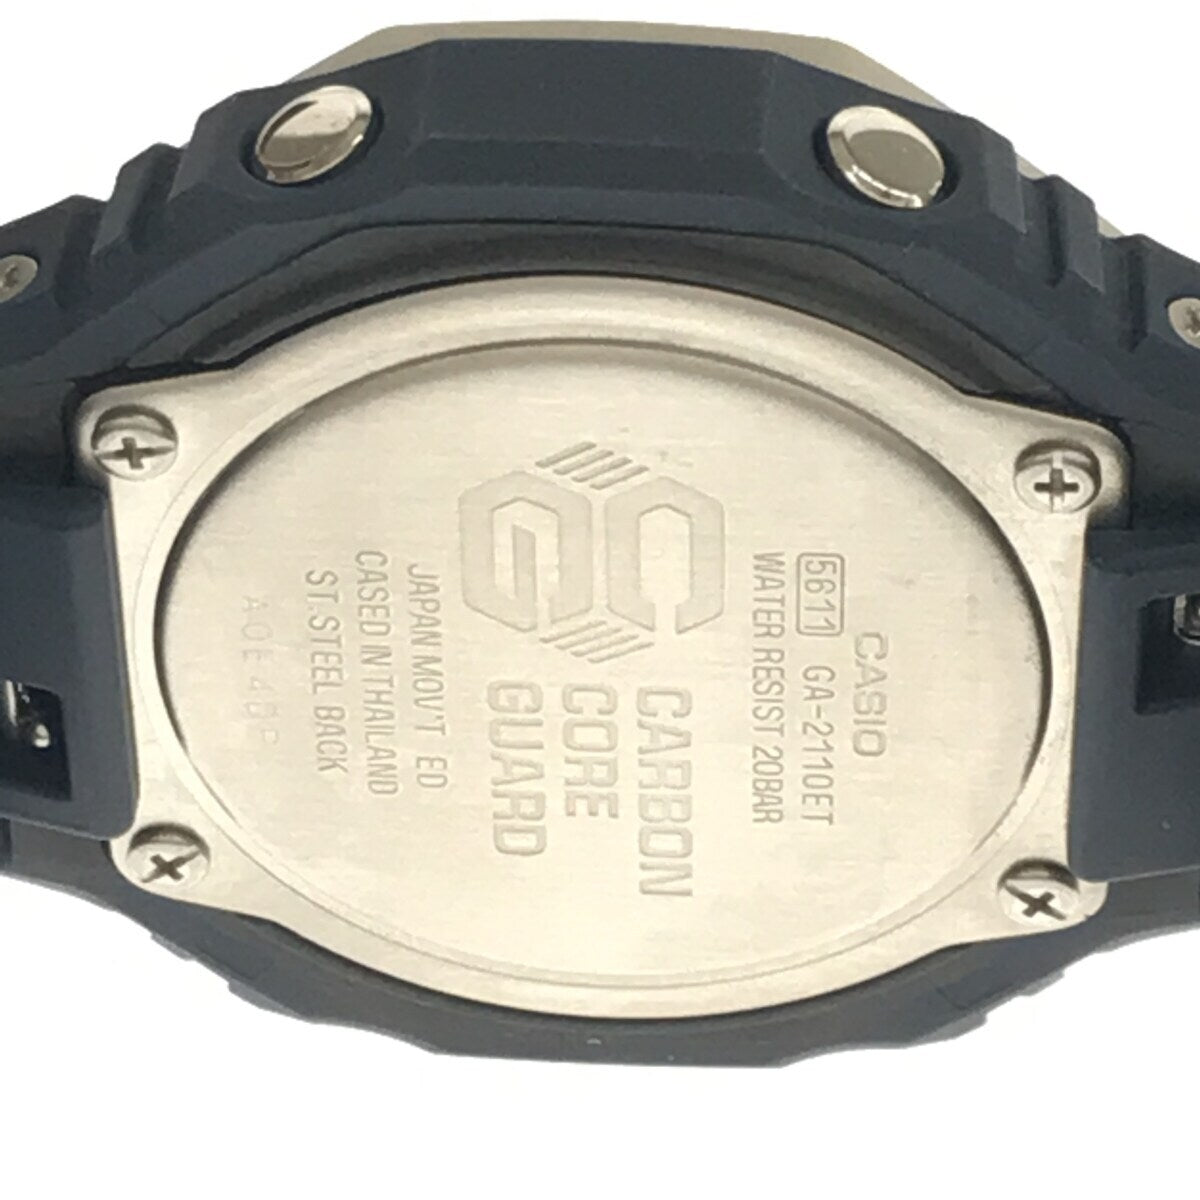 Gシュック カシオークGA-2110ET-2AJF - 腕時計(アナログ)